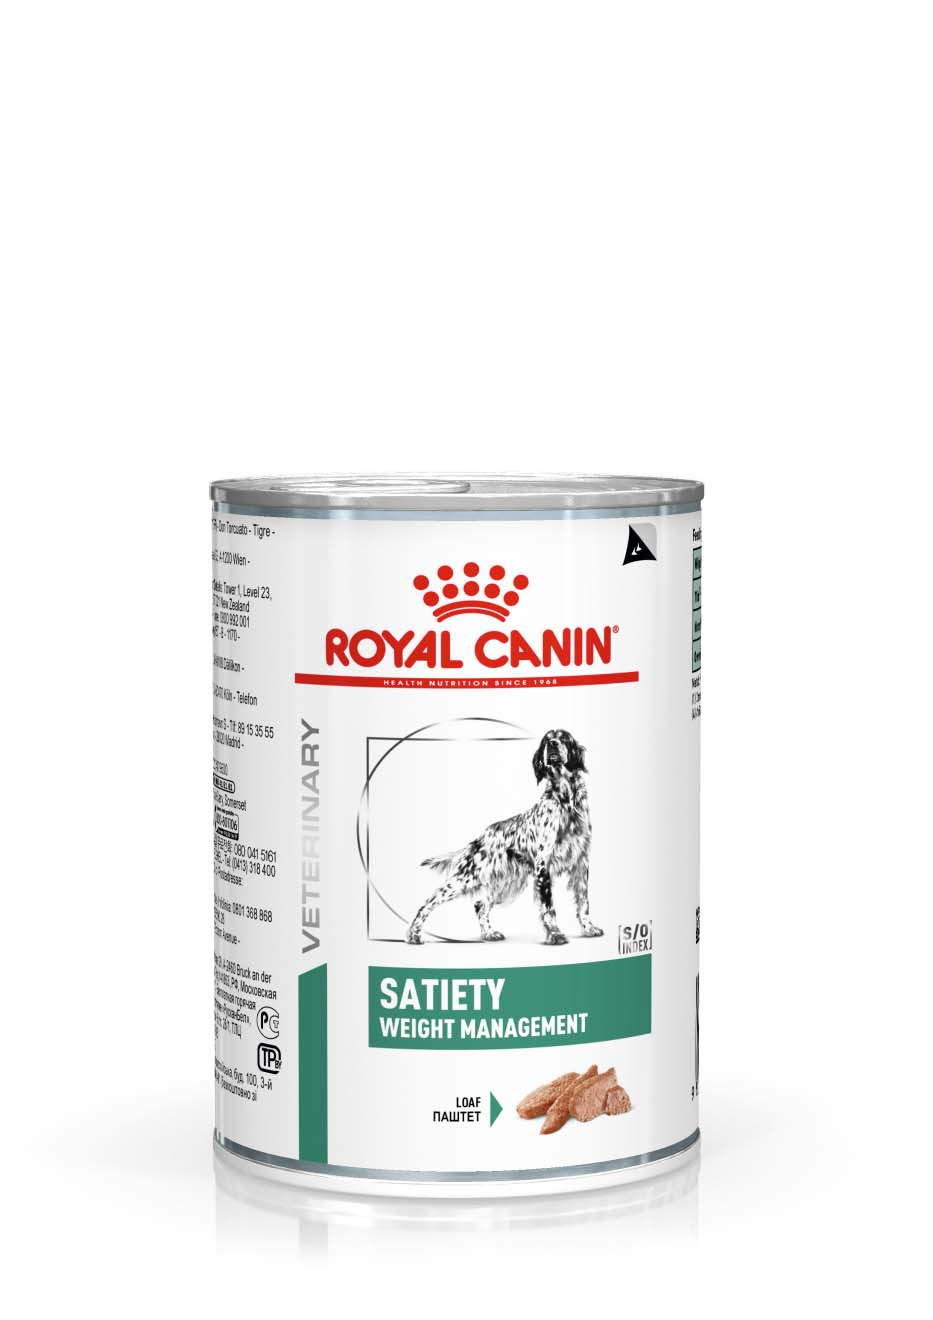 Royal Canin Satiety Weight Management Hond - blik 12x410g